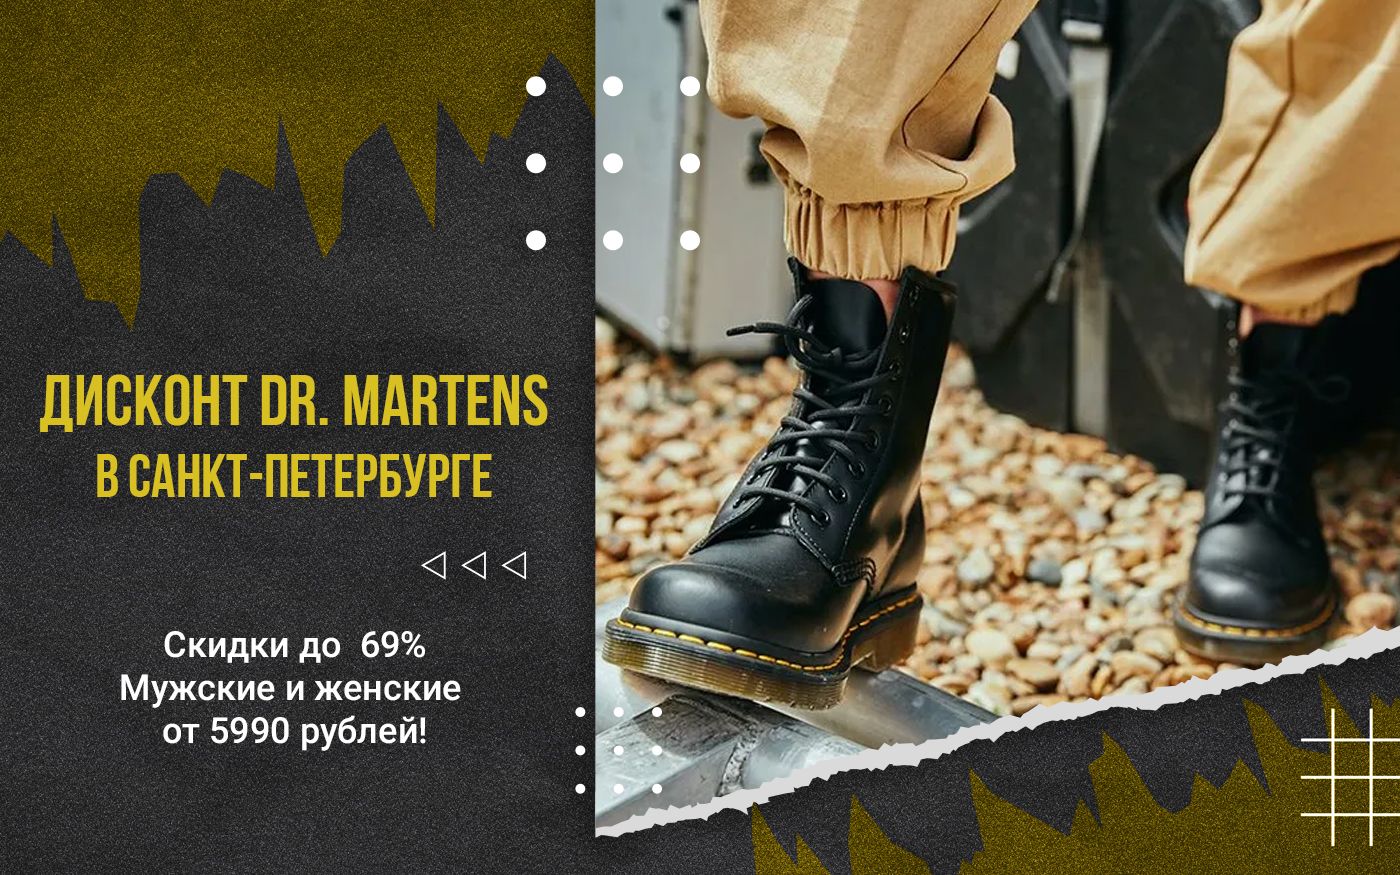 Dr Martens купить в СПб - ботинки Доктор Мартинс | Martens-Spb.ru